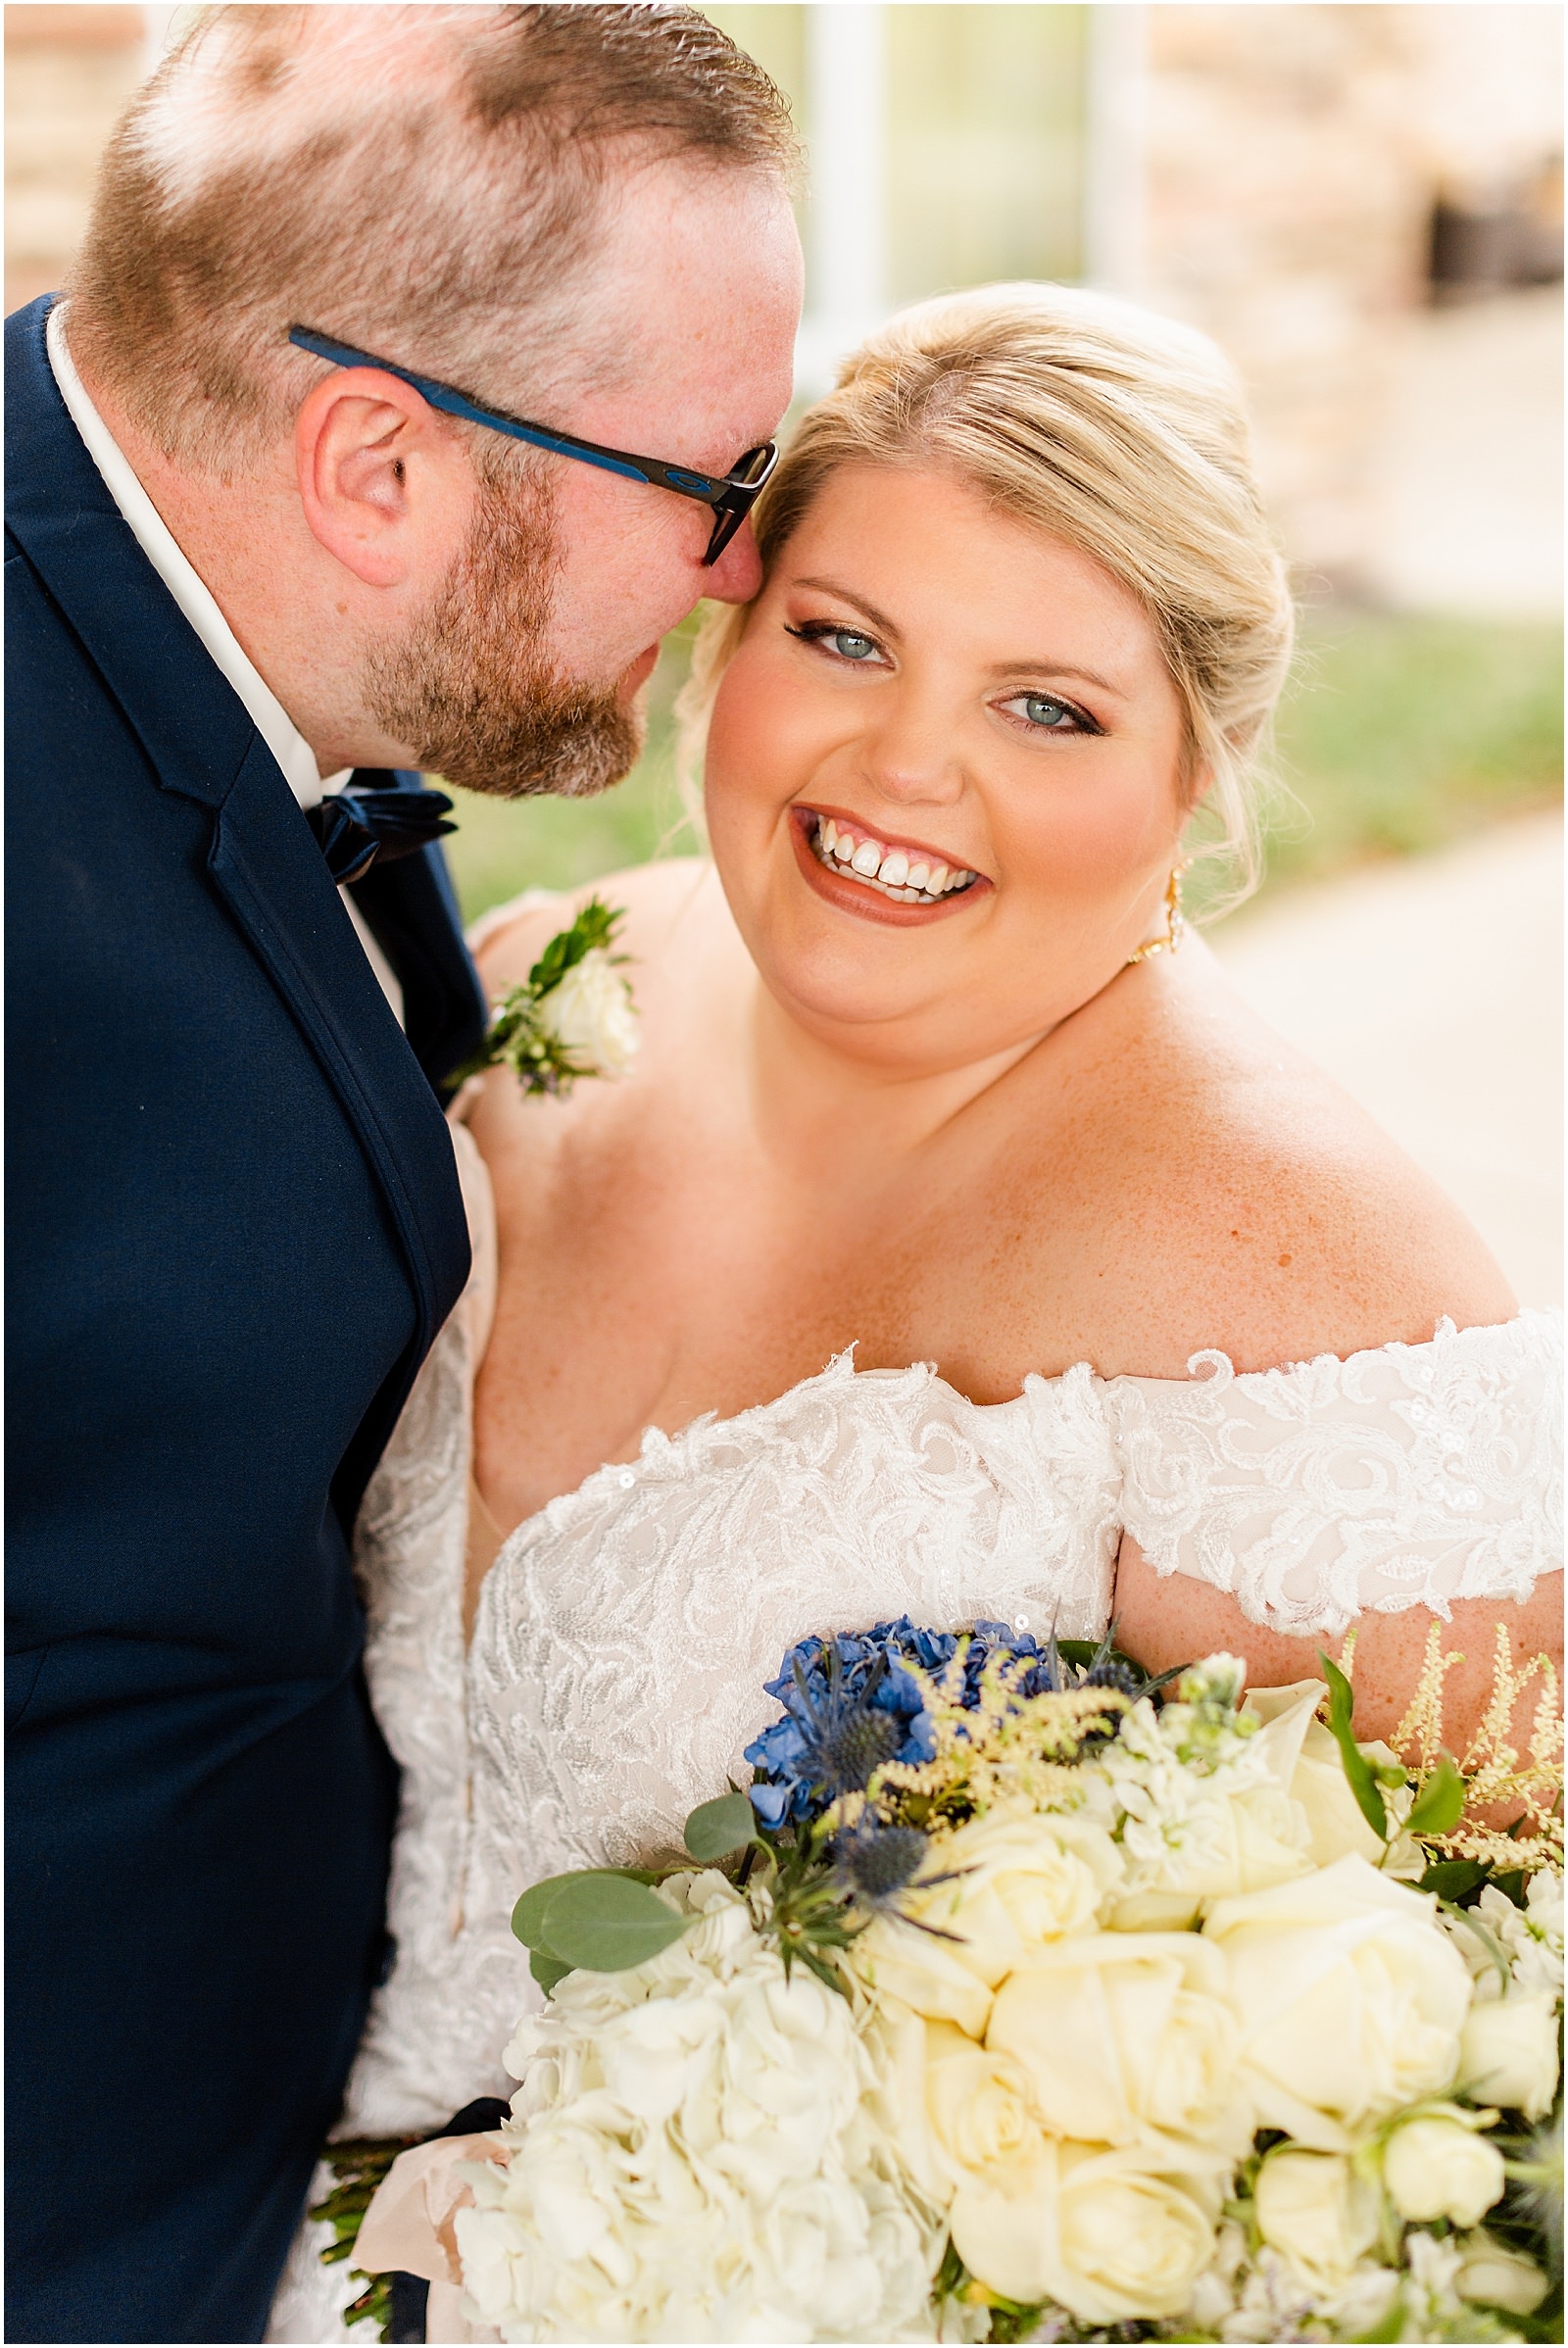 Brittany and Neil's Wedding at Neu Chapel Bret and Brandie | Evansville Photographers | @bretandbrandie-0050.jpg